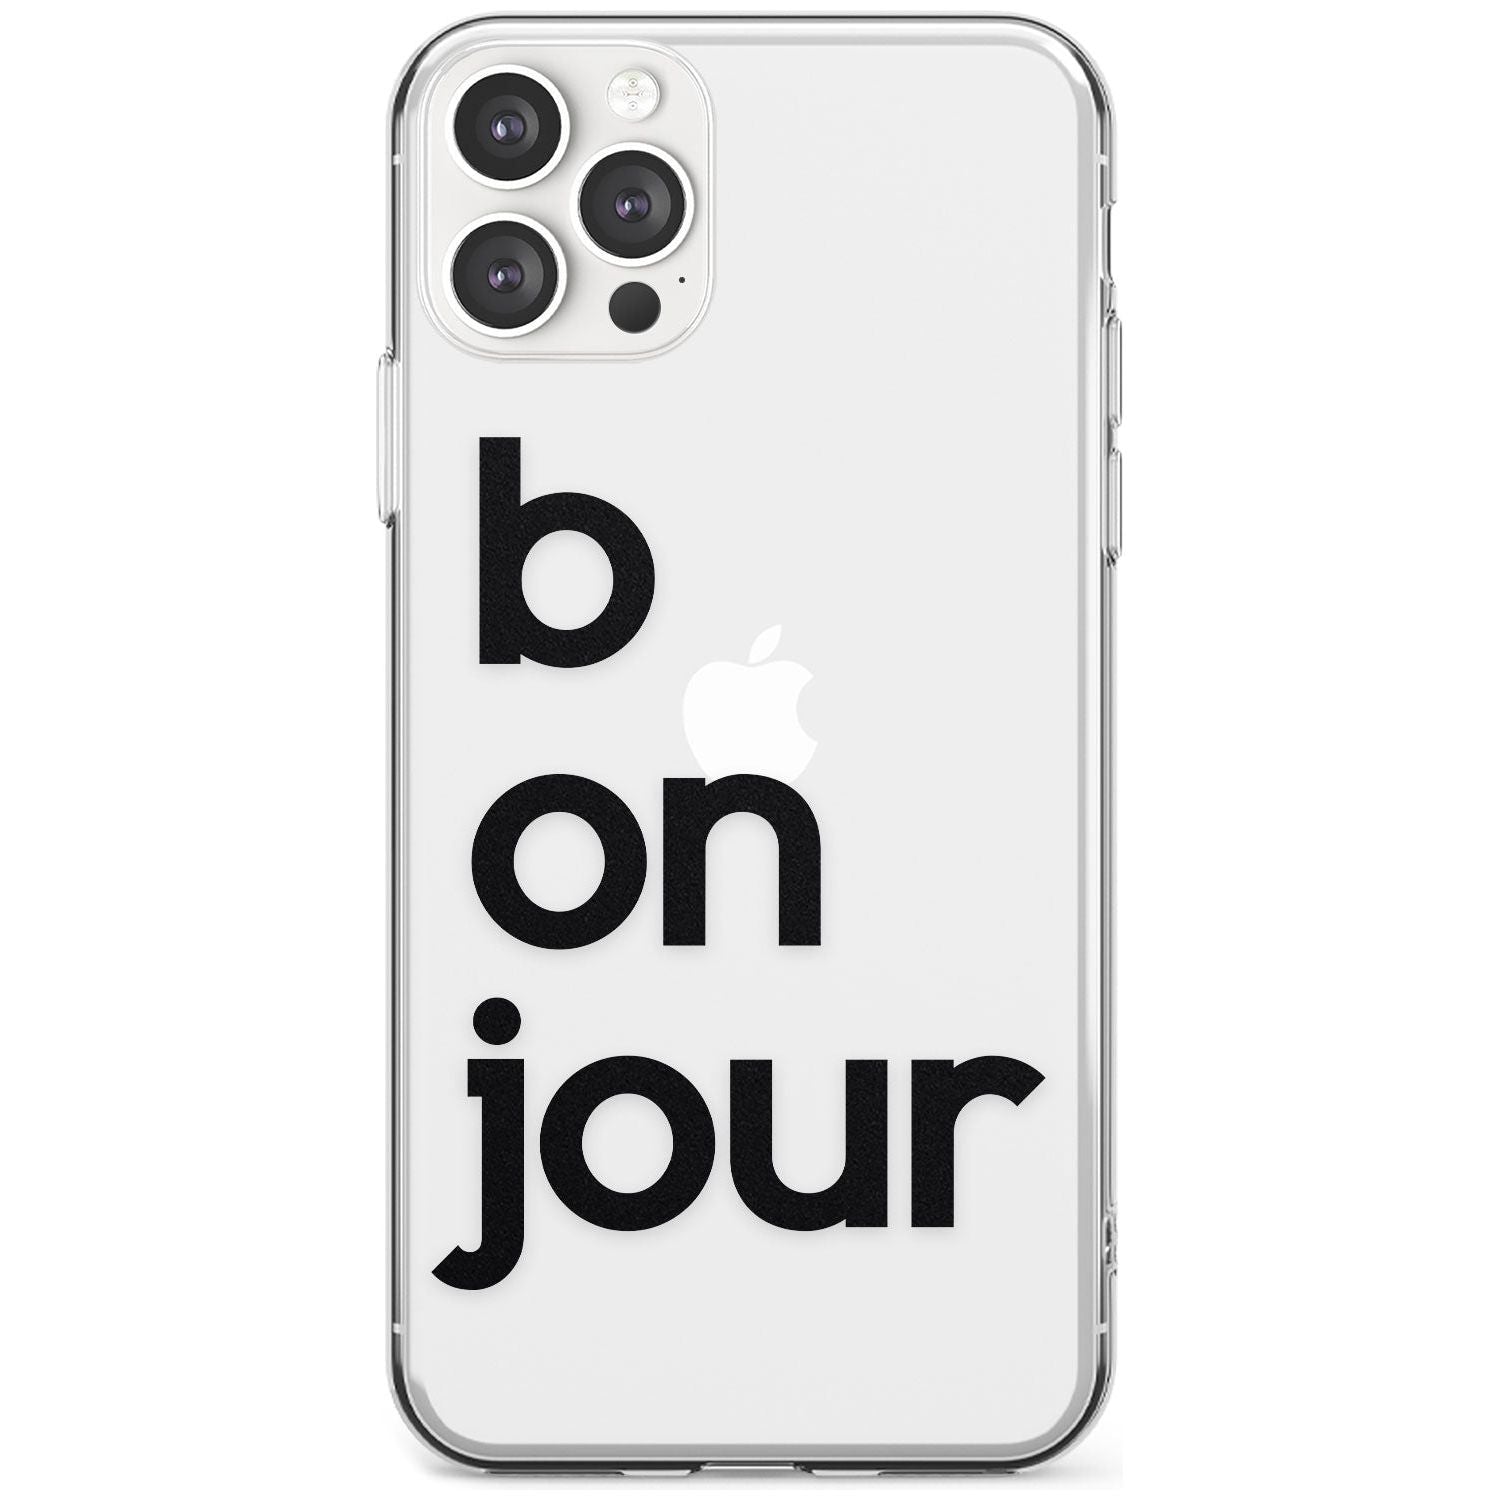 Bonjour Black Impact Phone Case for iPhone 11 Pro Max